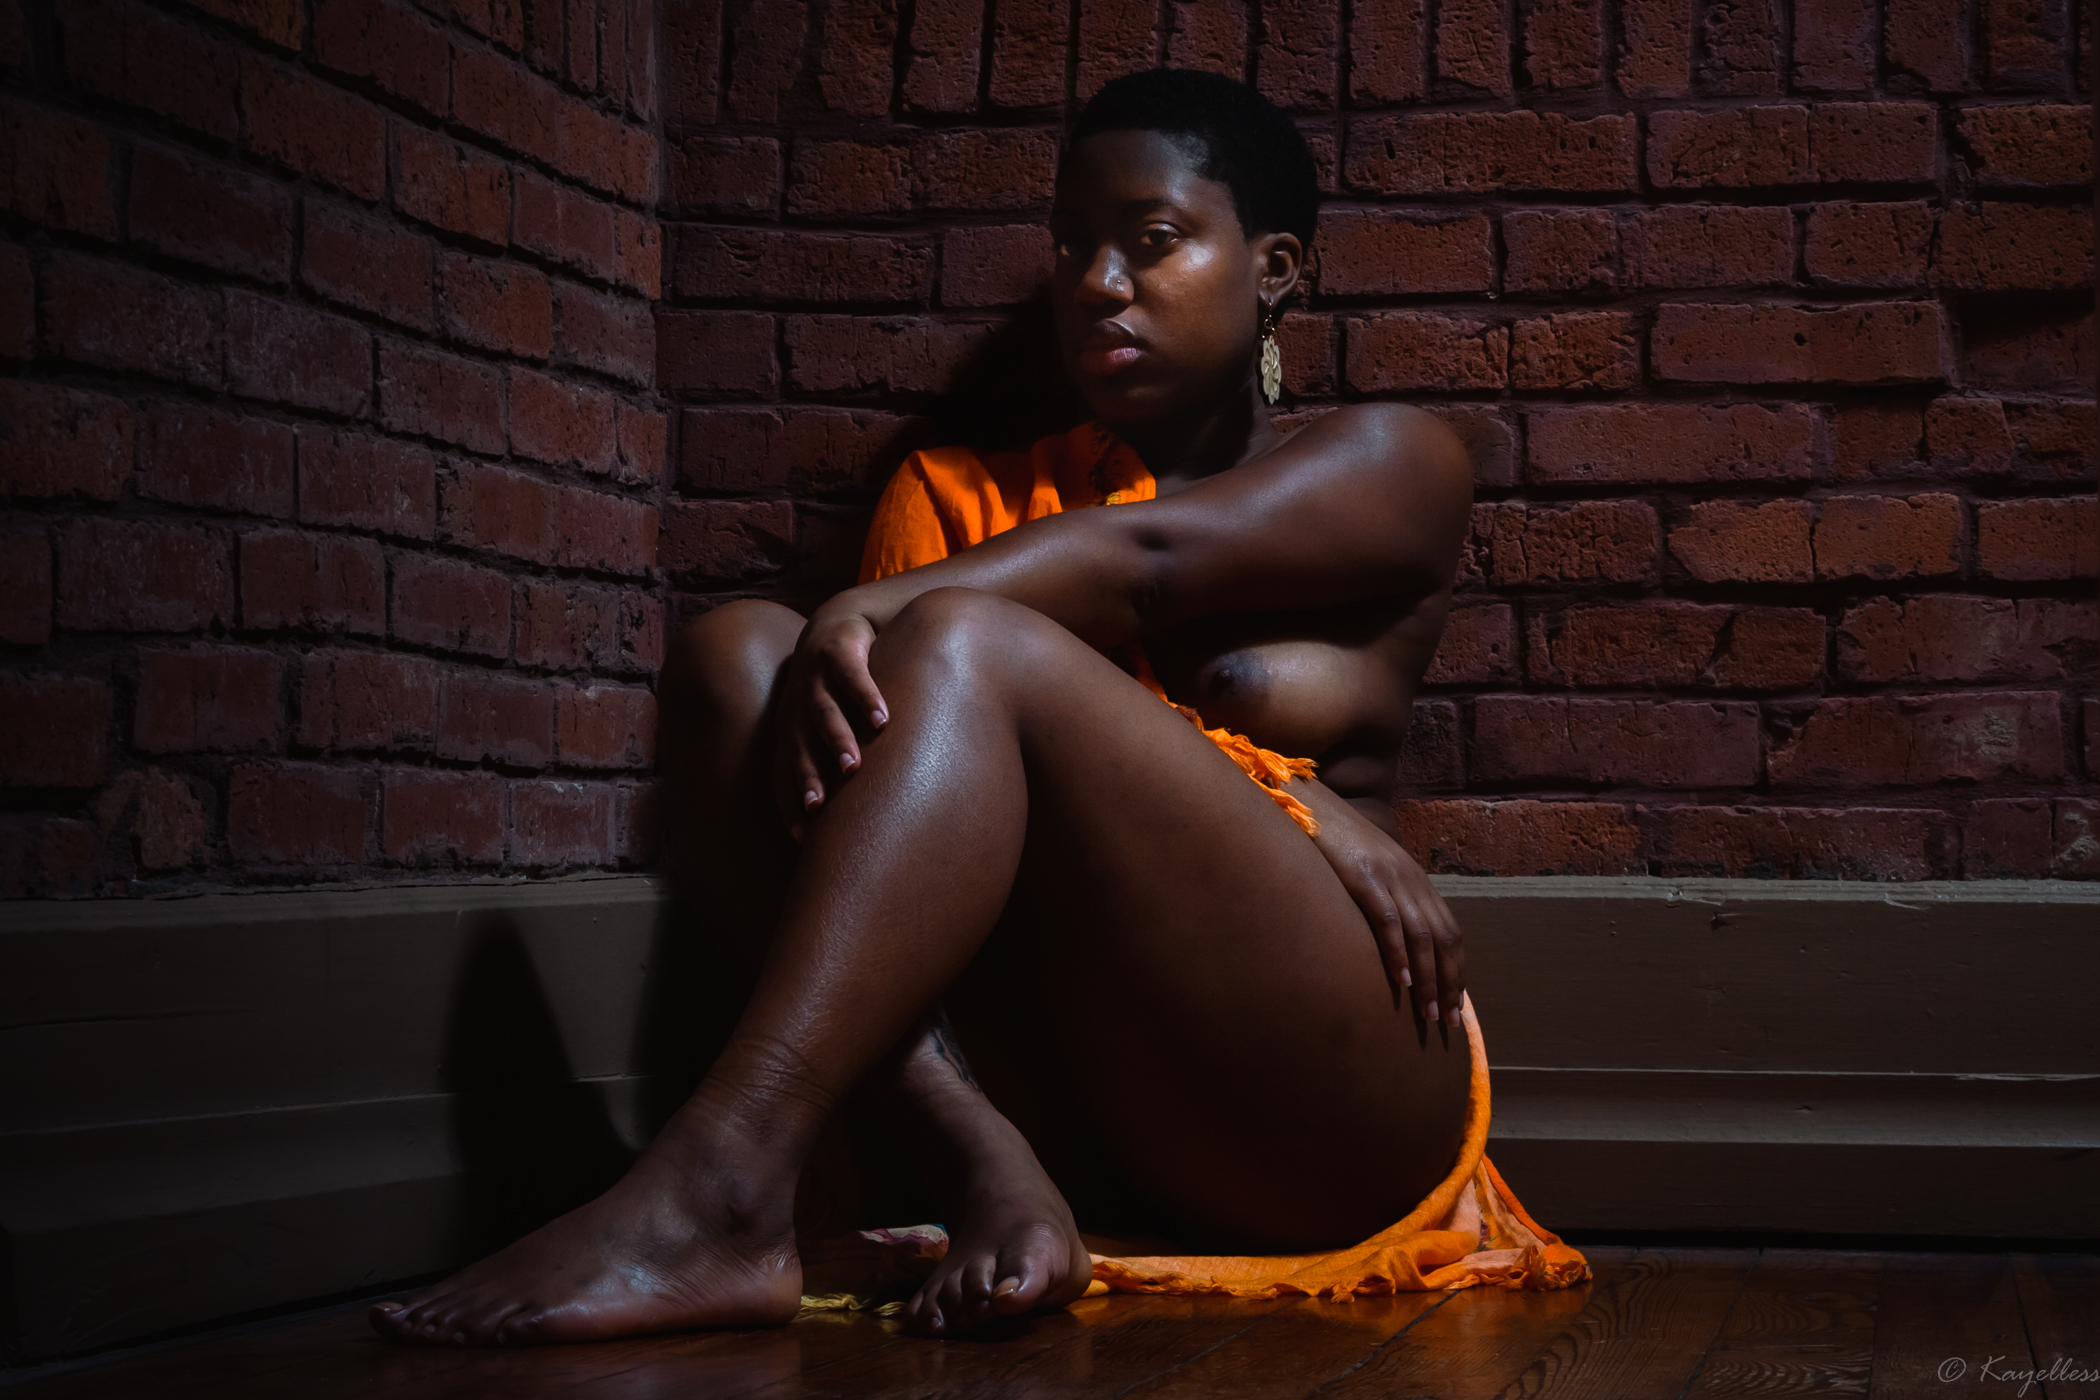 Black woman sitting in corner with brick walls